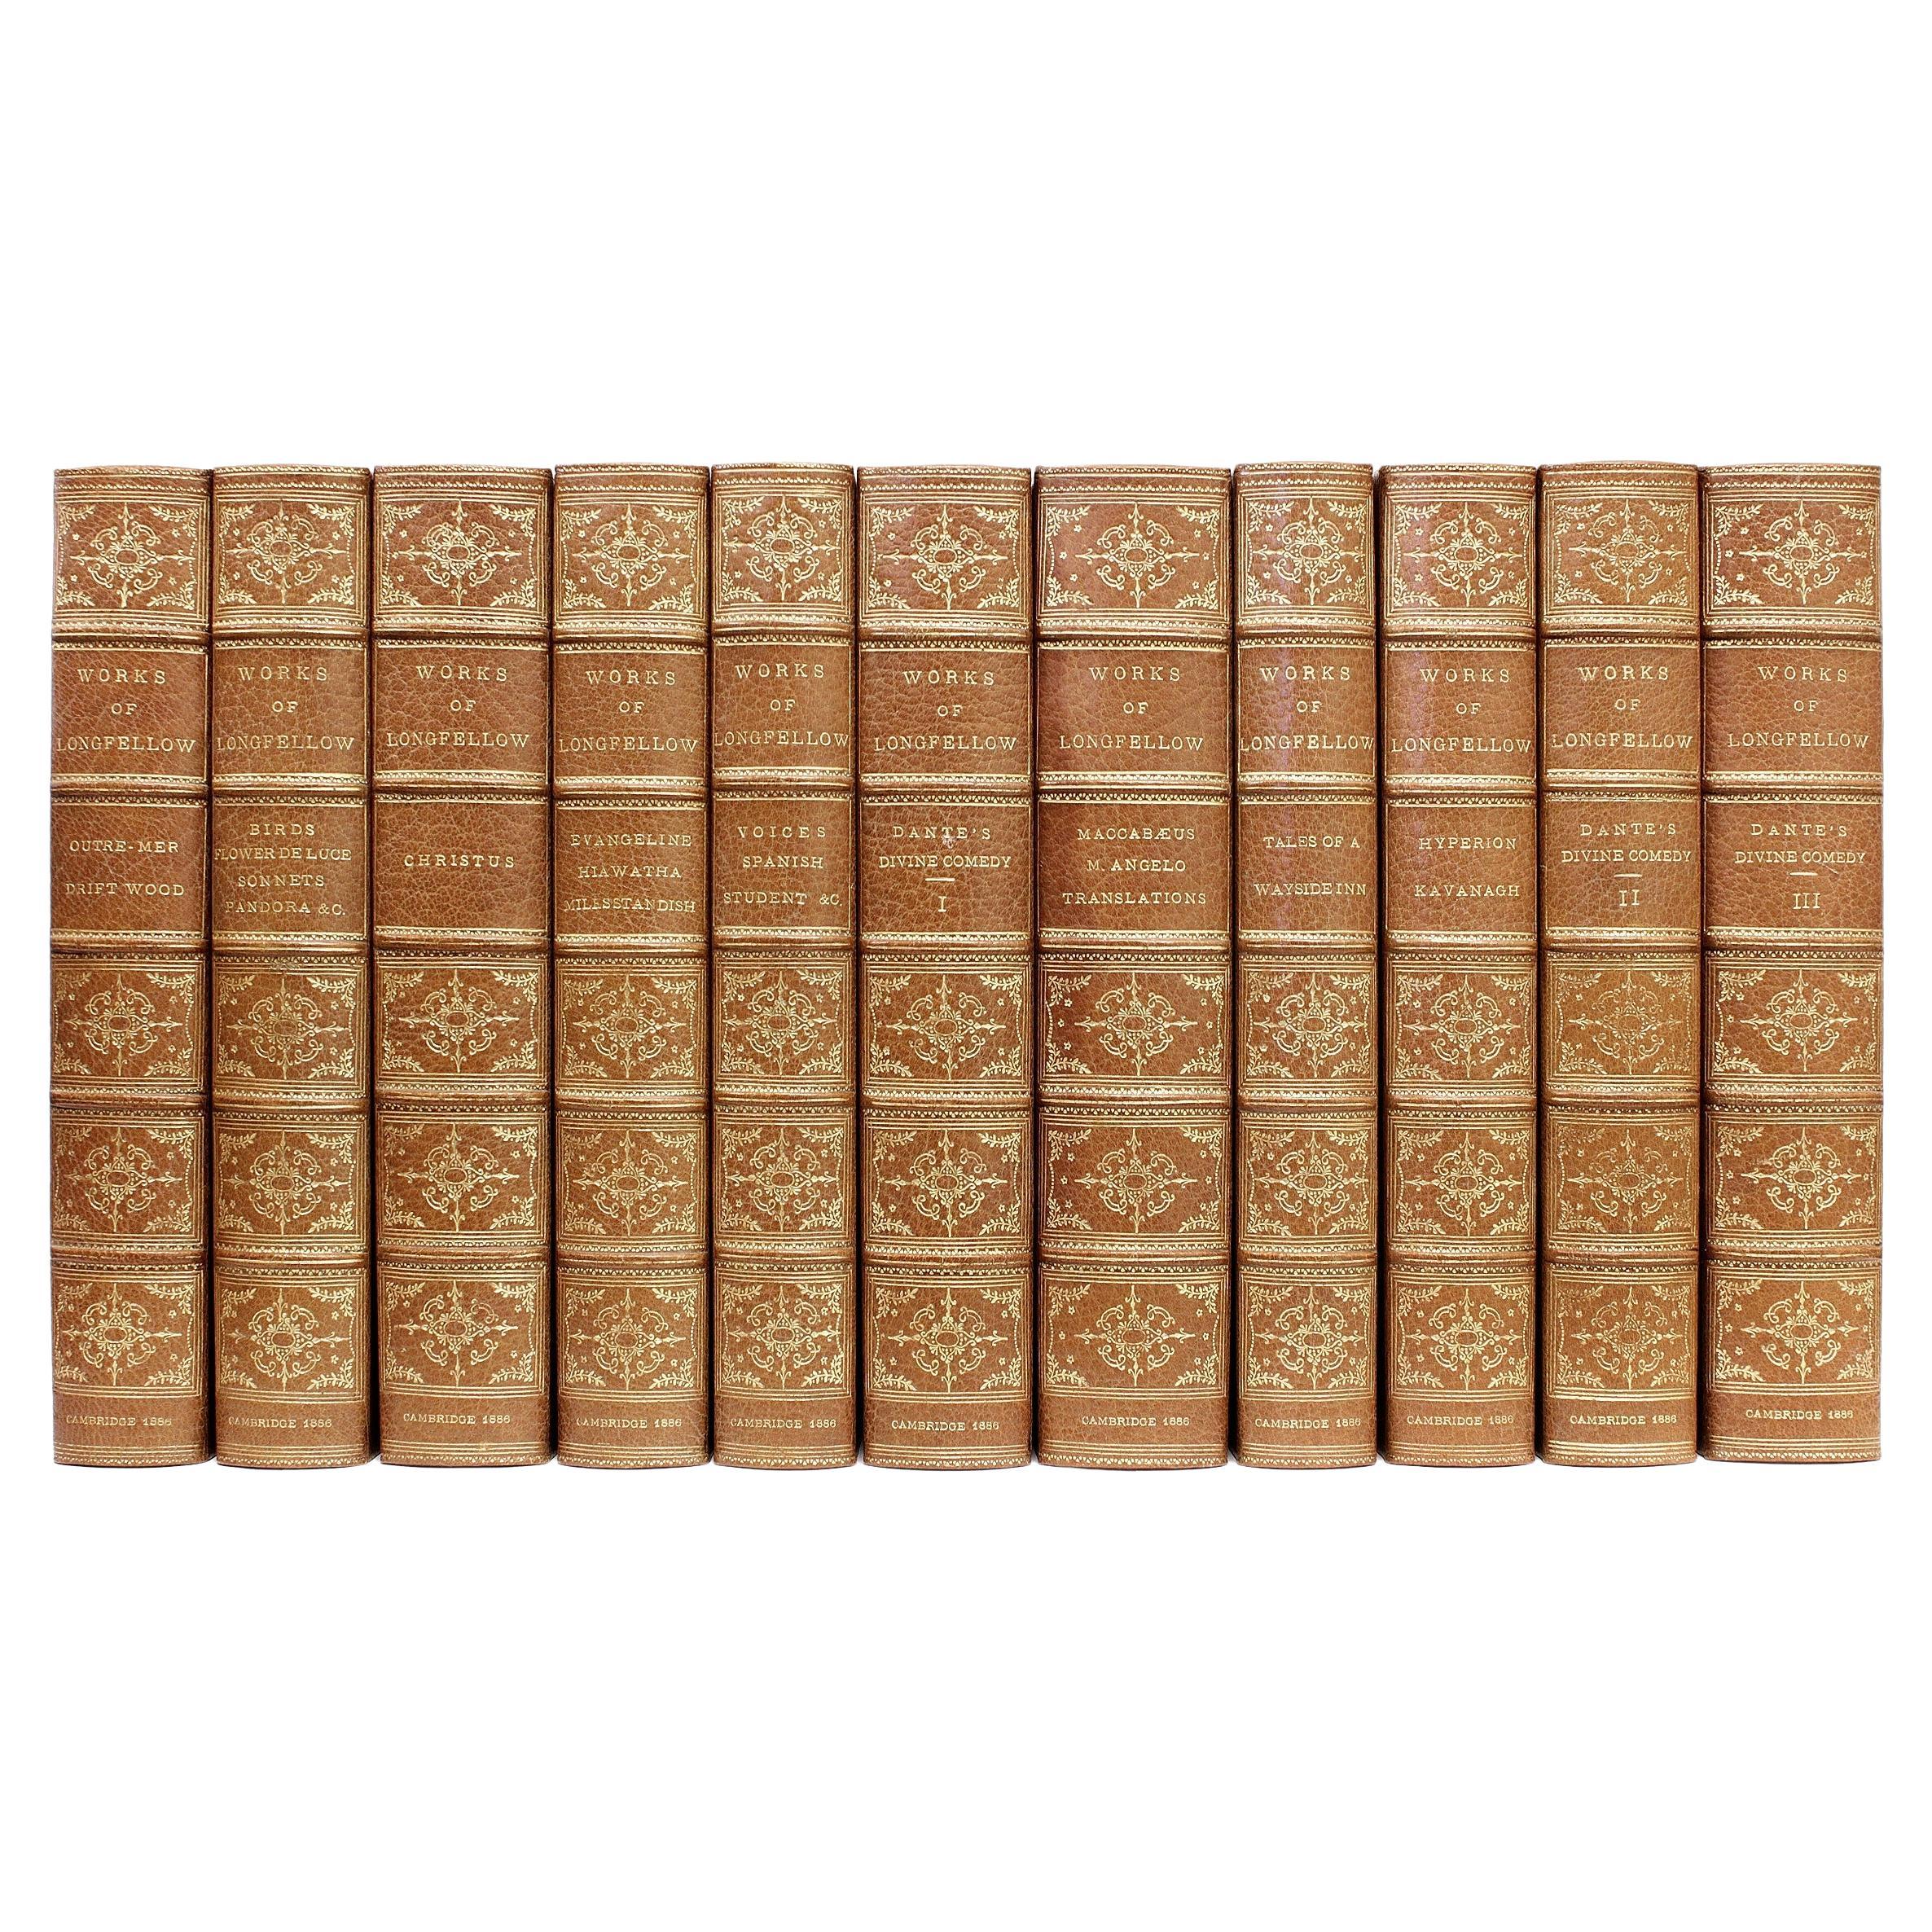 Complete Works Of Henry Wadsworth Longfellow. 11 Bände. GROSSE PAPIERAUSGABE 1886